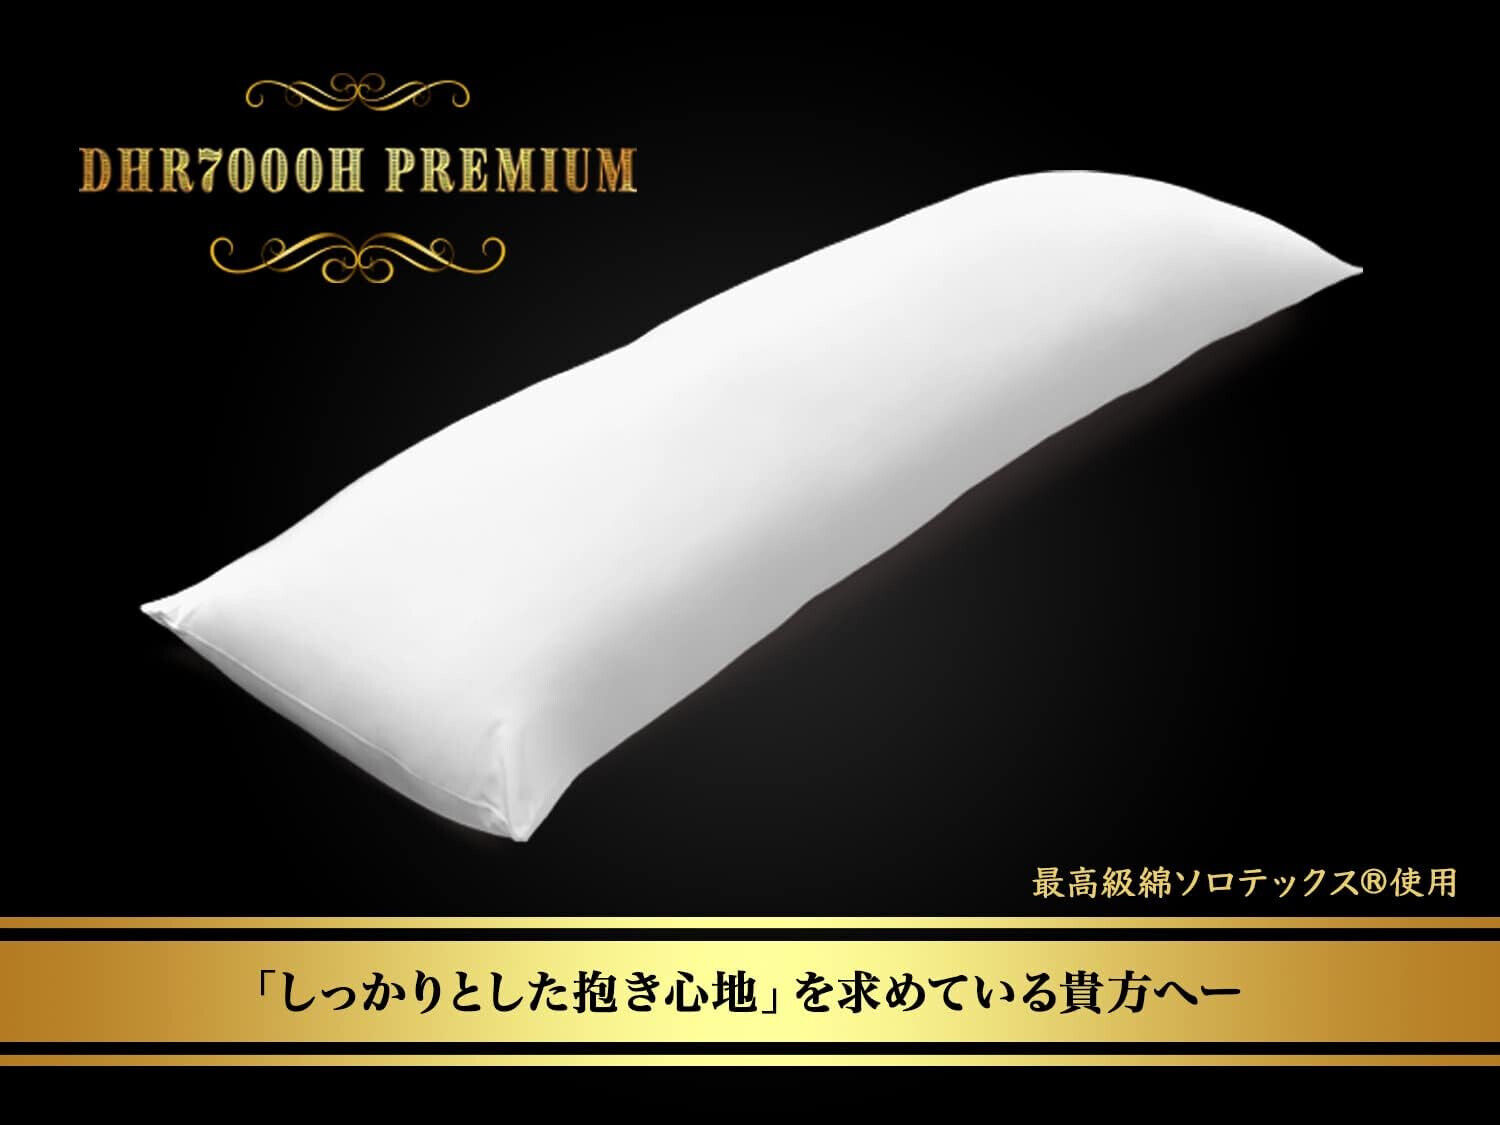 A&J Original Body Pillow Dakimakura Premium Glad 160 x 50 cm DHR7000H From Japan